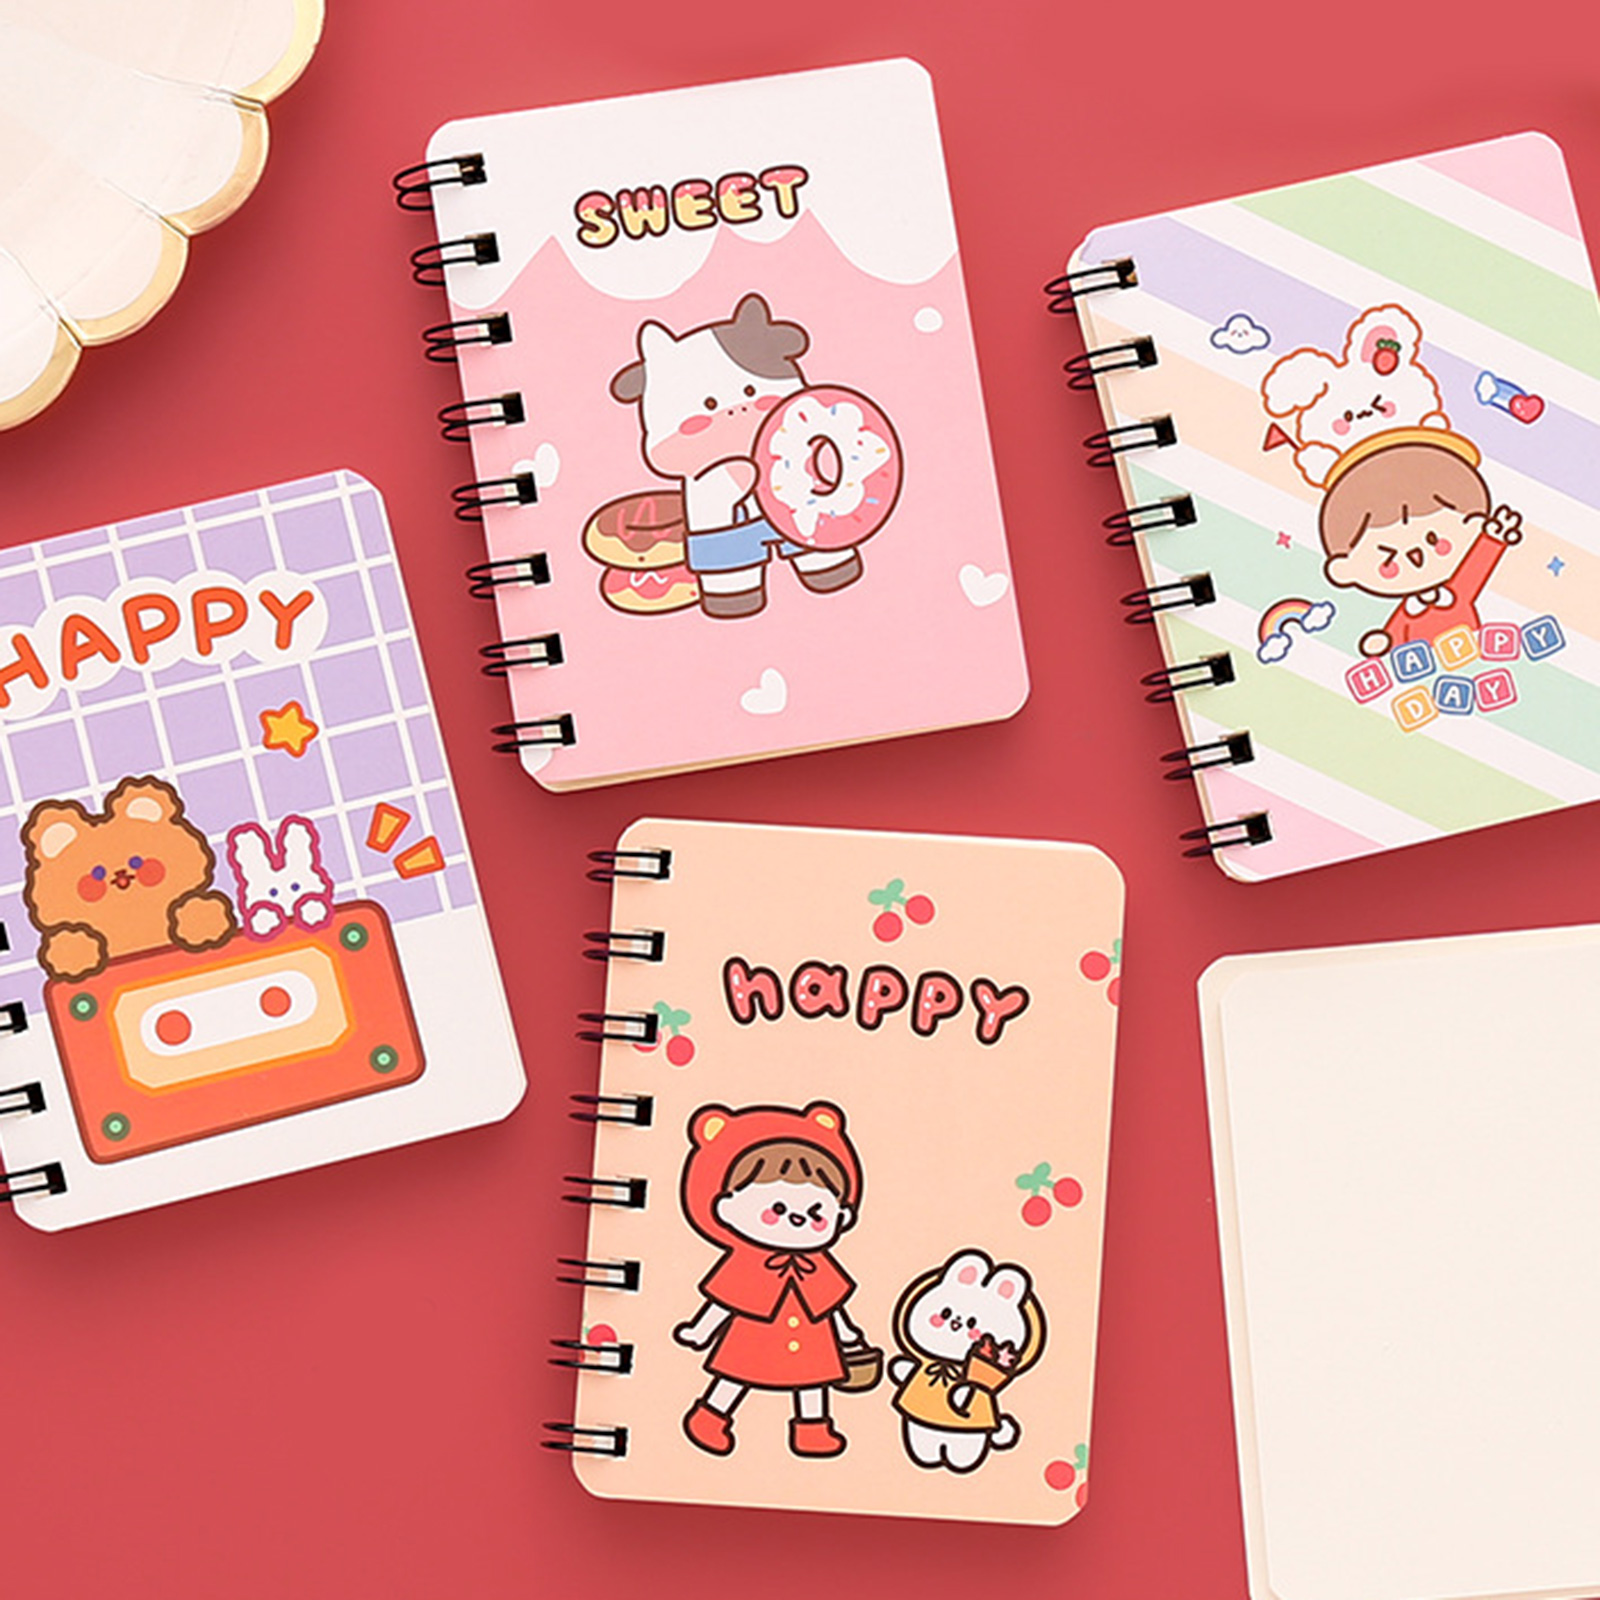 YEUHTLL Cartoon Mini Pocket Spiral Notebook Blank/Lined Note Book 4.13x3.15  Inch Memo Notepad for Preschool Kindergarten Kids